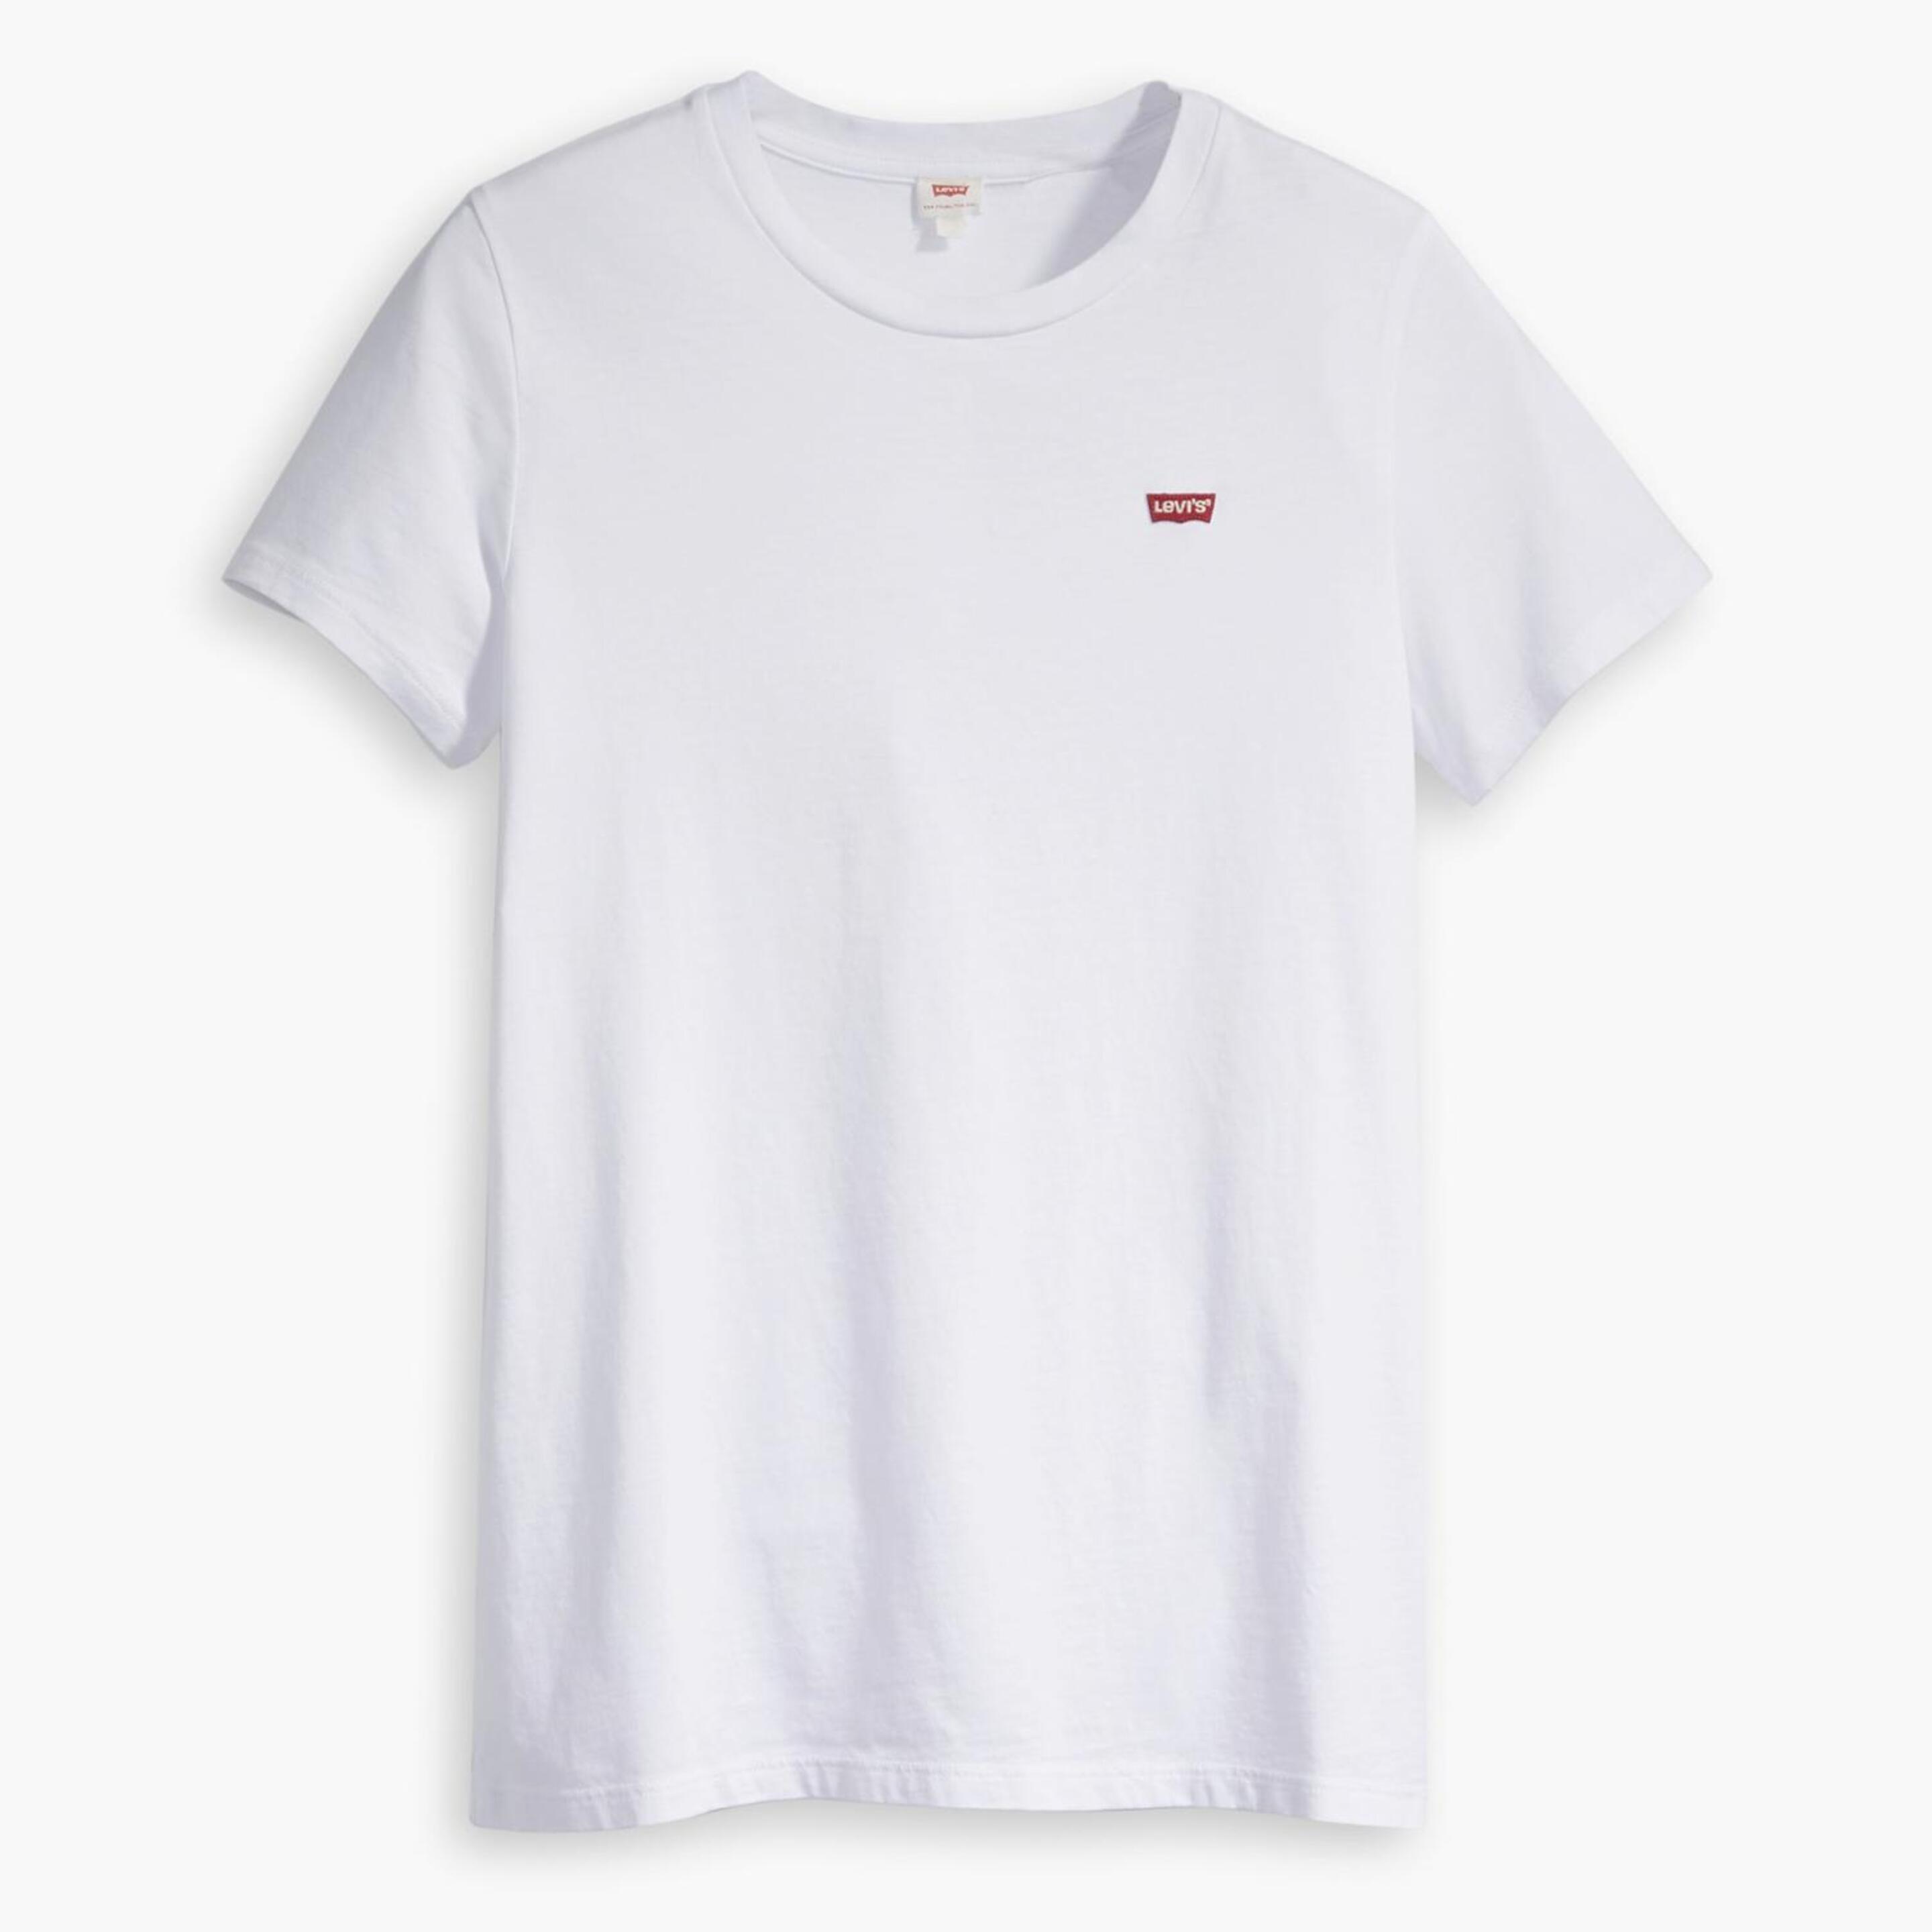 Levi's Chesthit - blanco - Camiseta Mujer